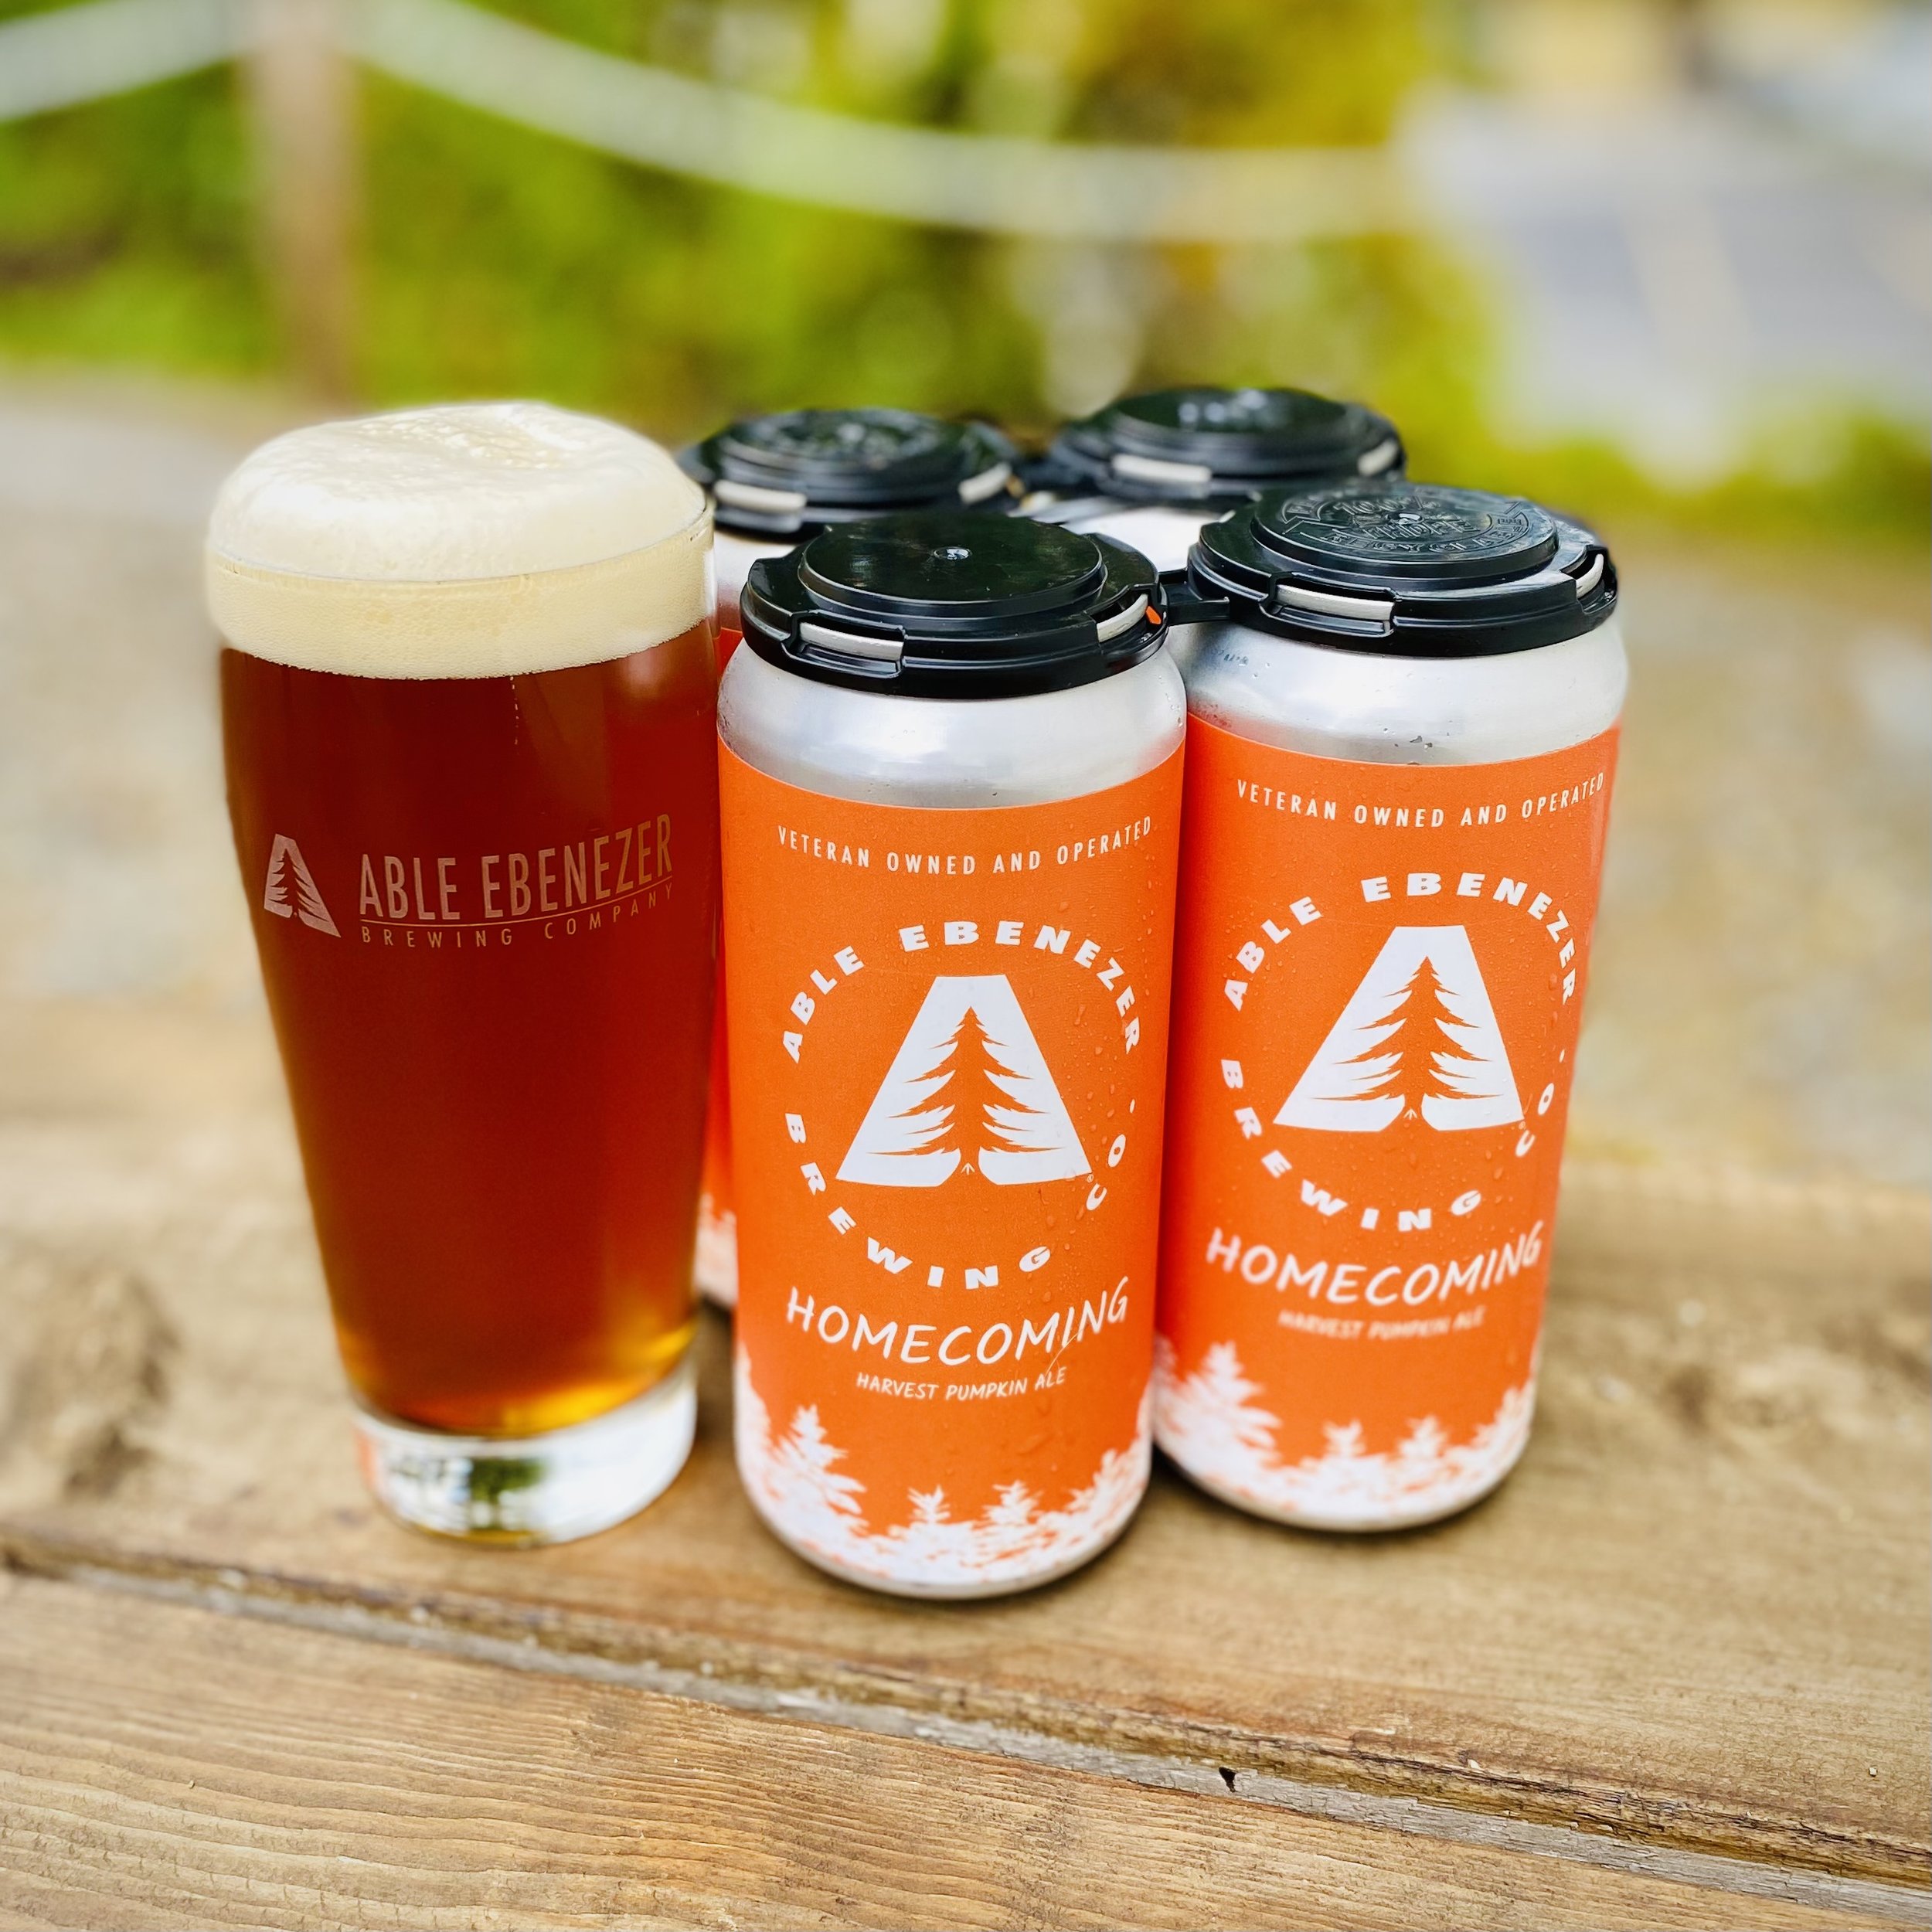 Bar Stories — Able Ebenezer Brewing Company